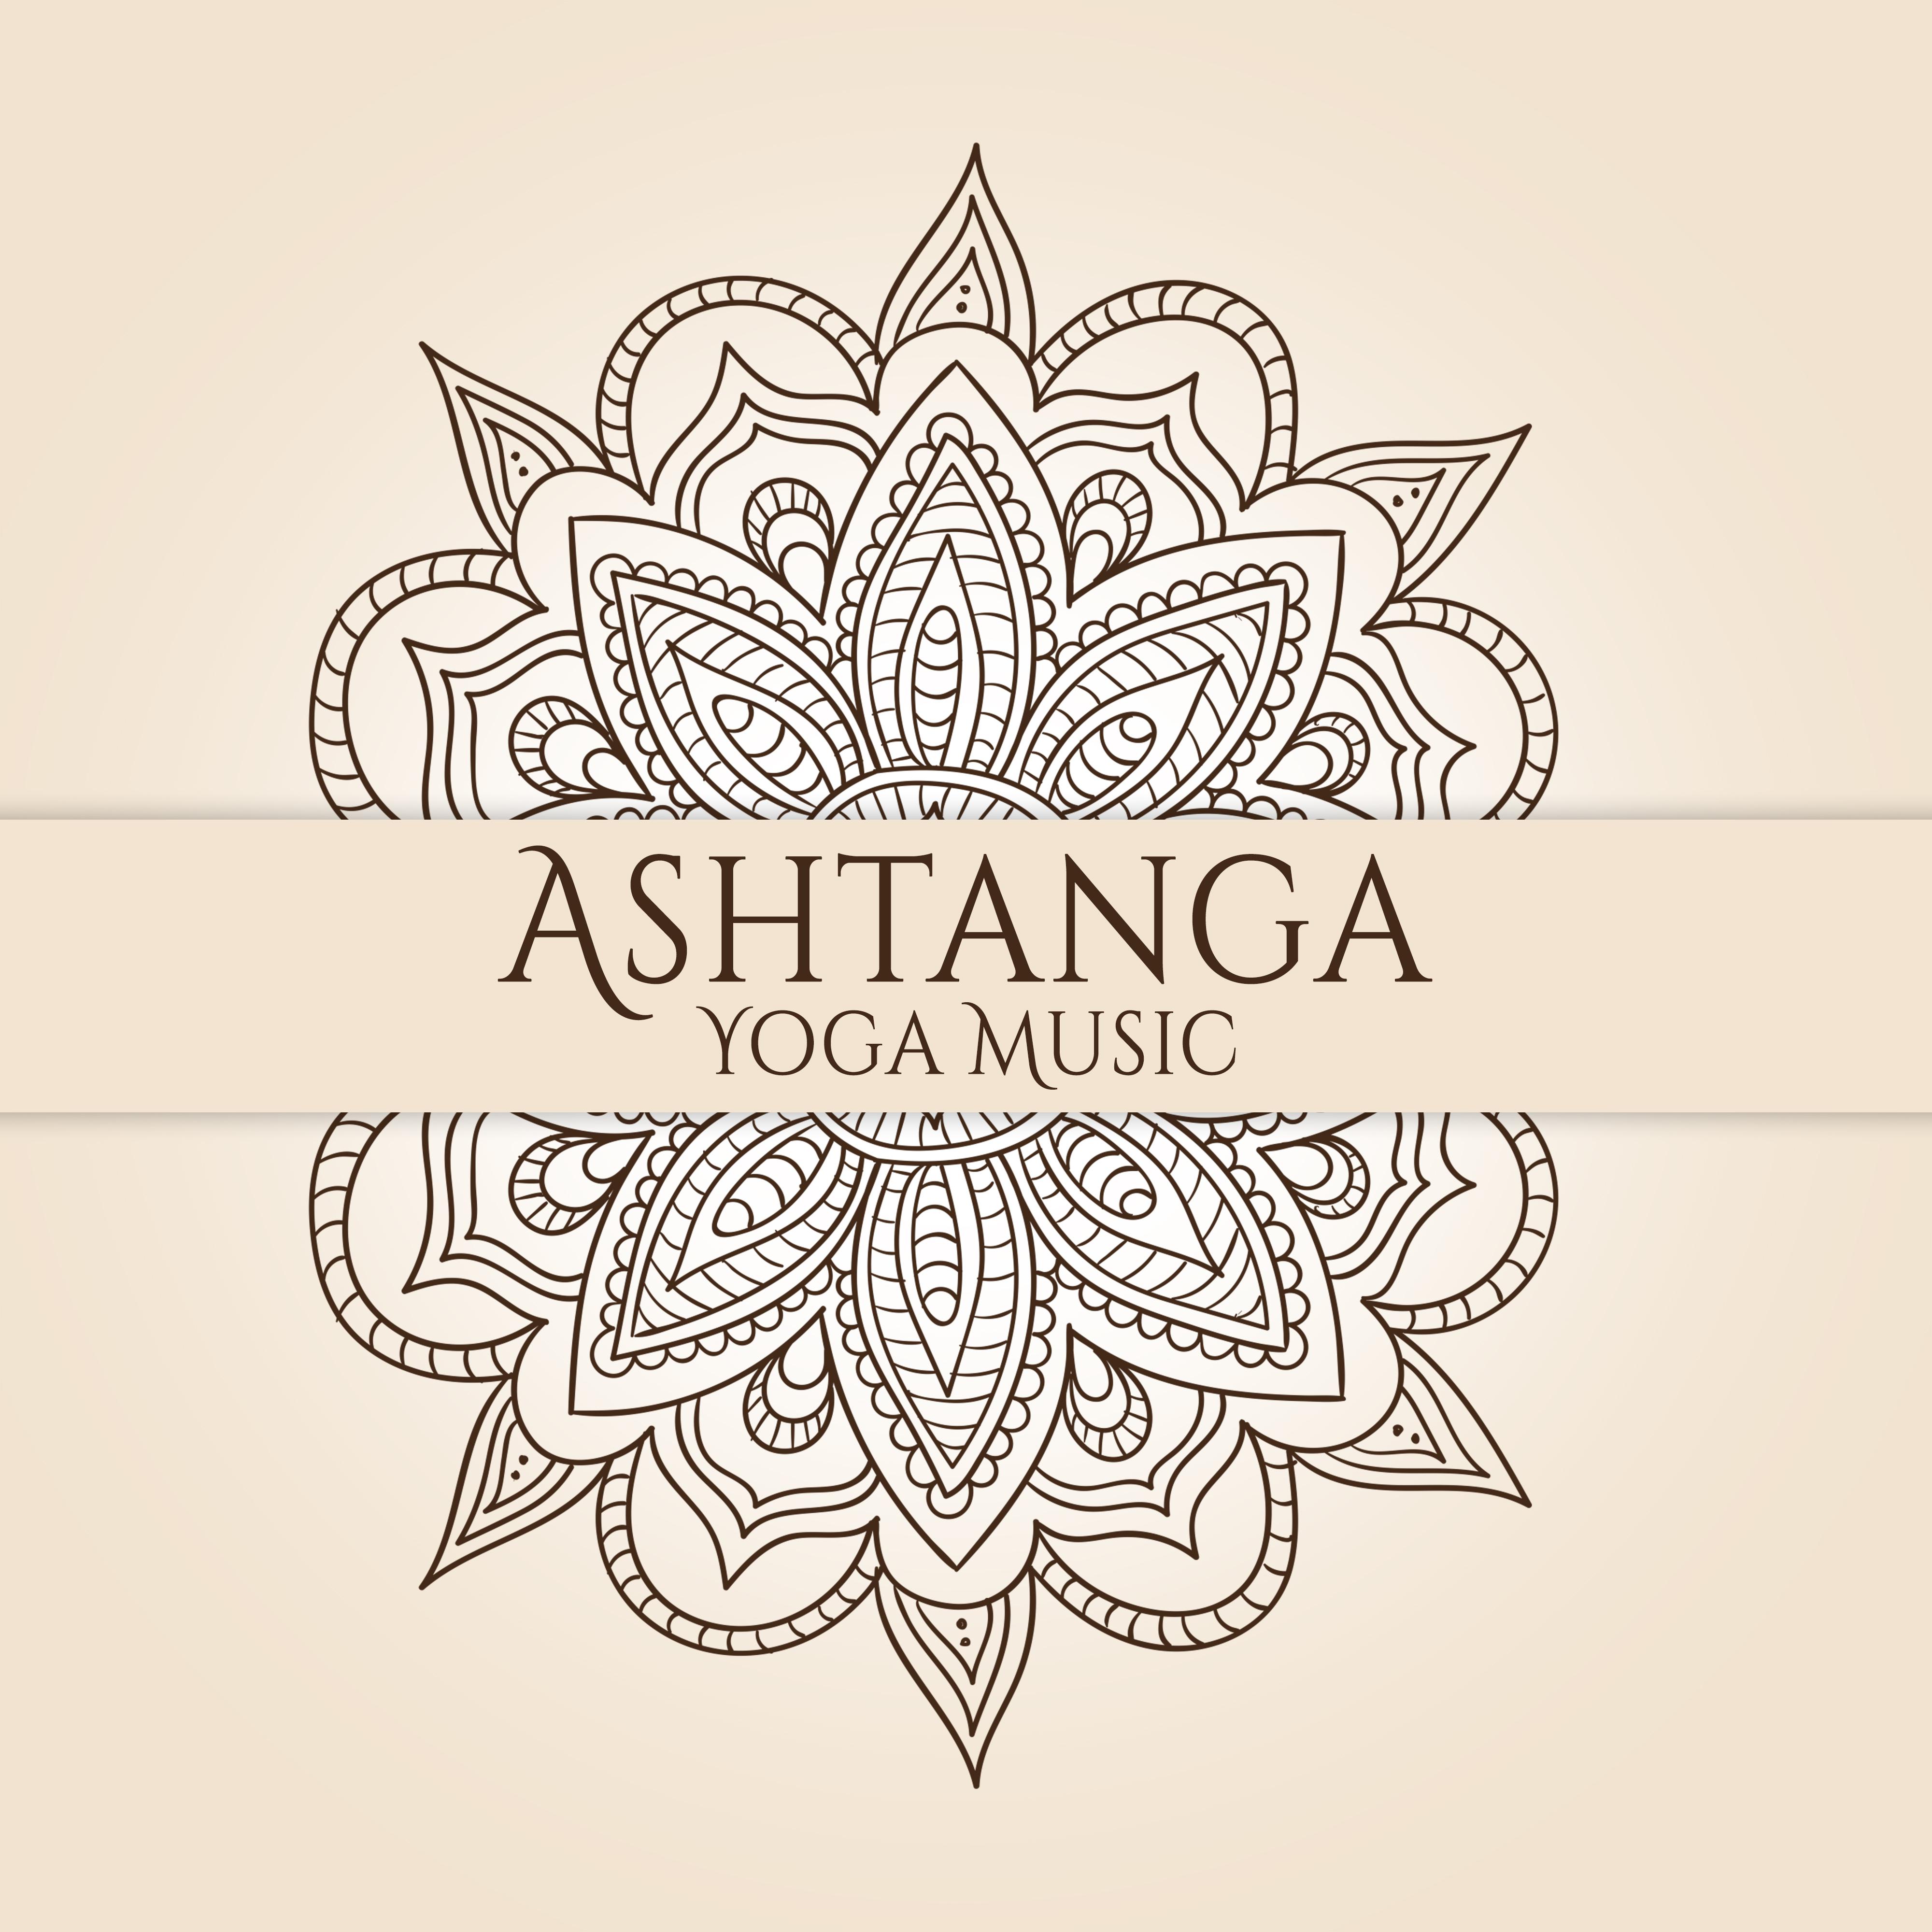 Ashtanga Yoga Music  Pure Sounds of Nature, Best Background Music for Yoga, Meditation, Zen